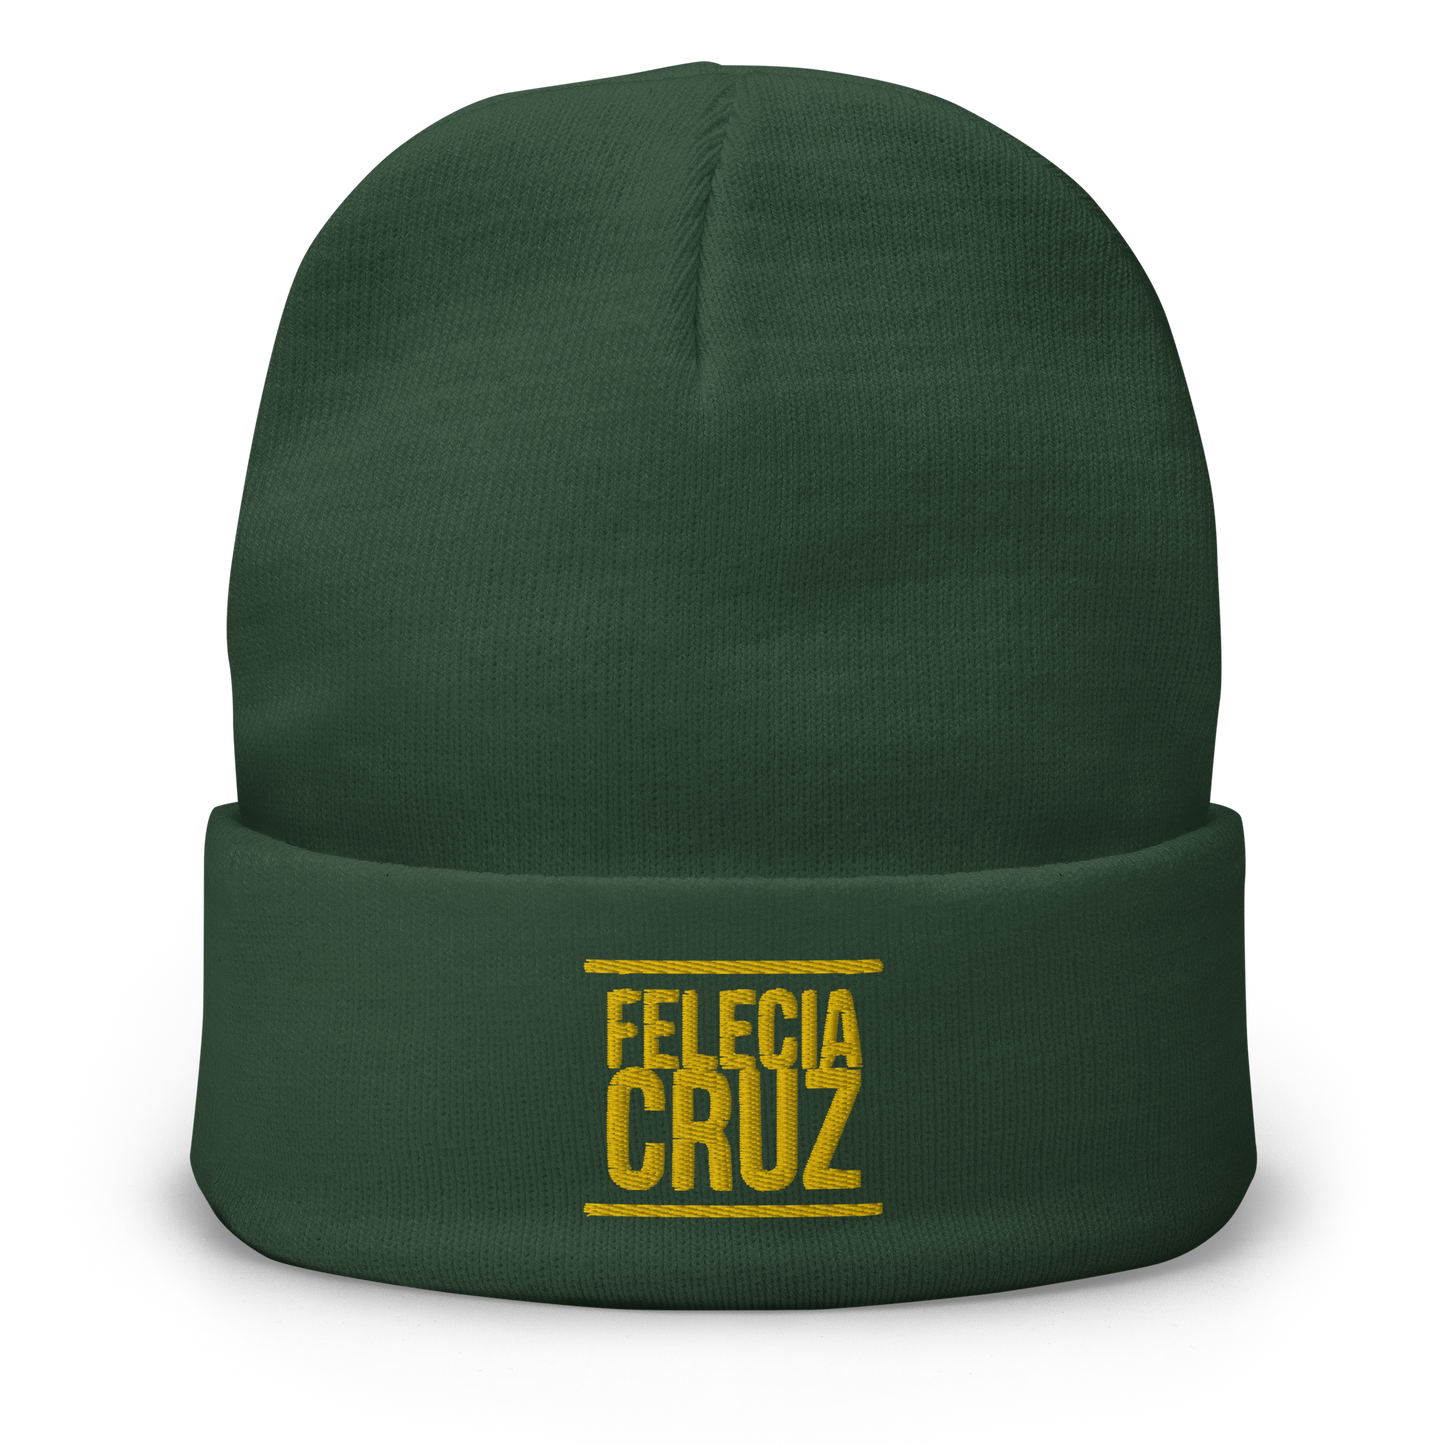 Felecia Cruz Logo Embroidered Beanie